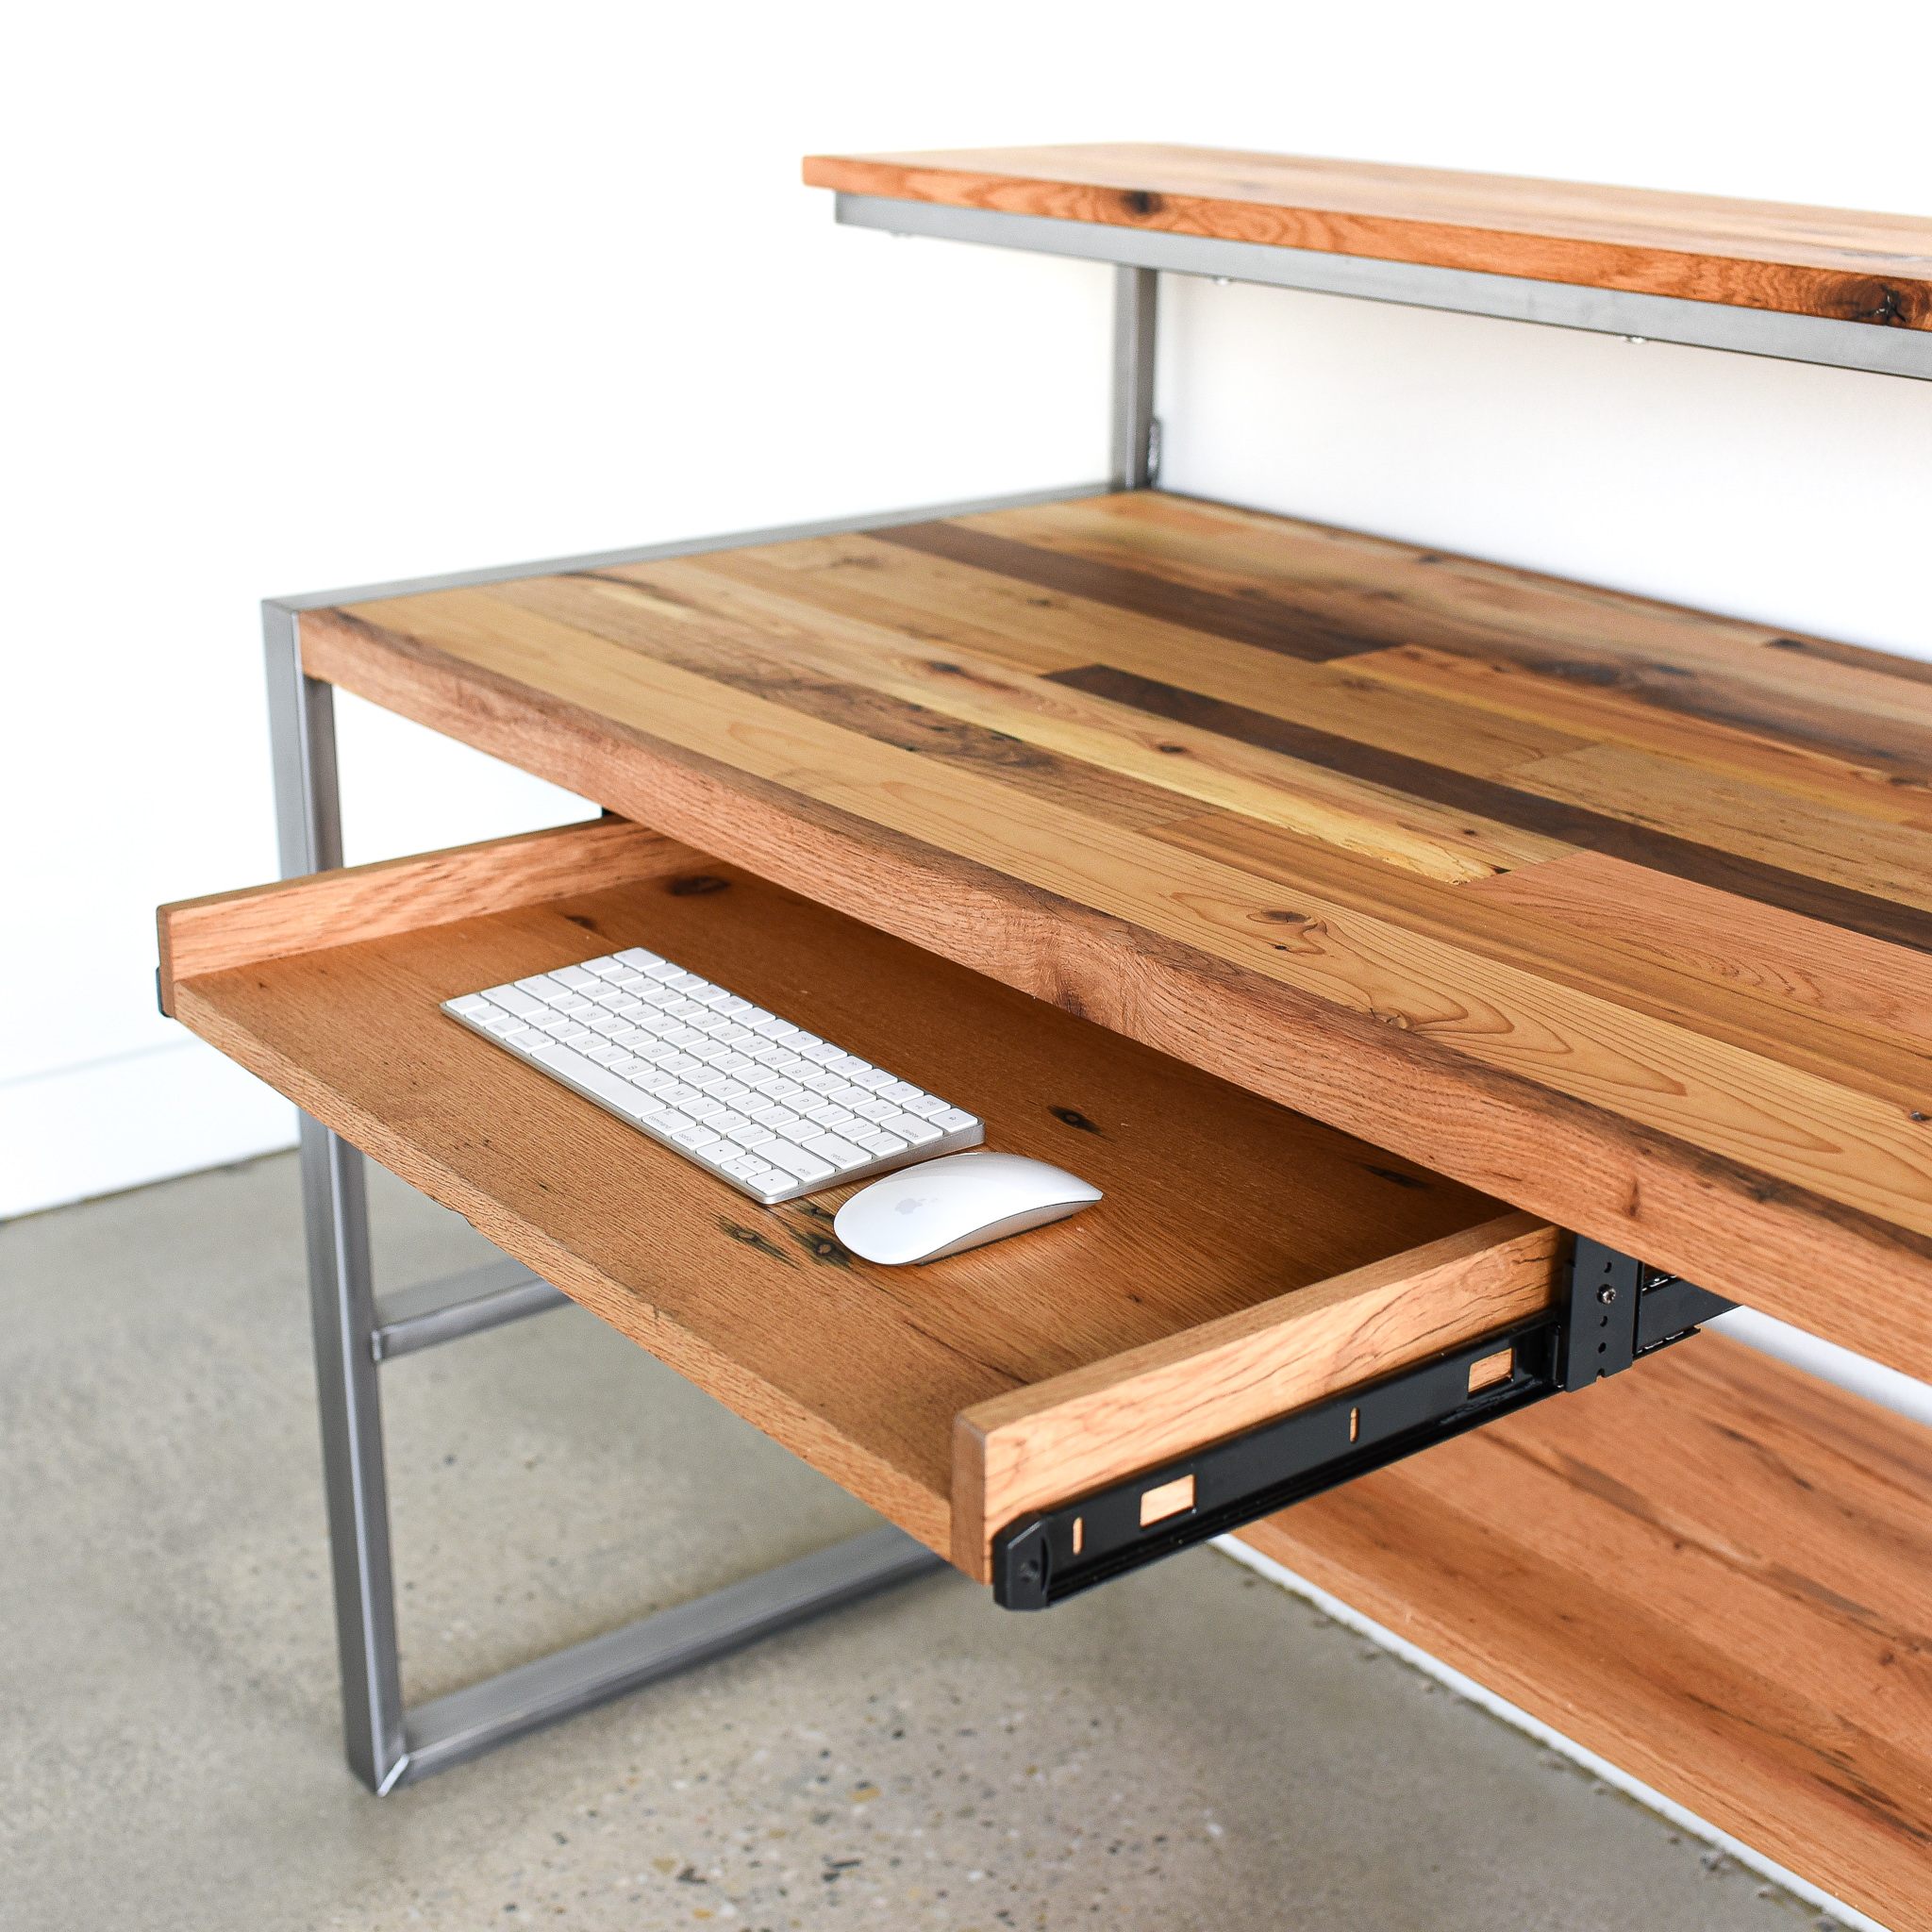 Reclaimed Wood Desk Keyboard Tray What We Make